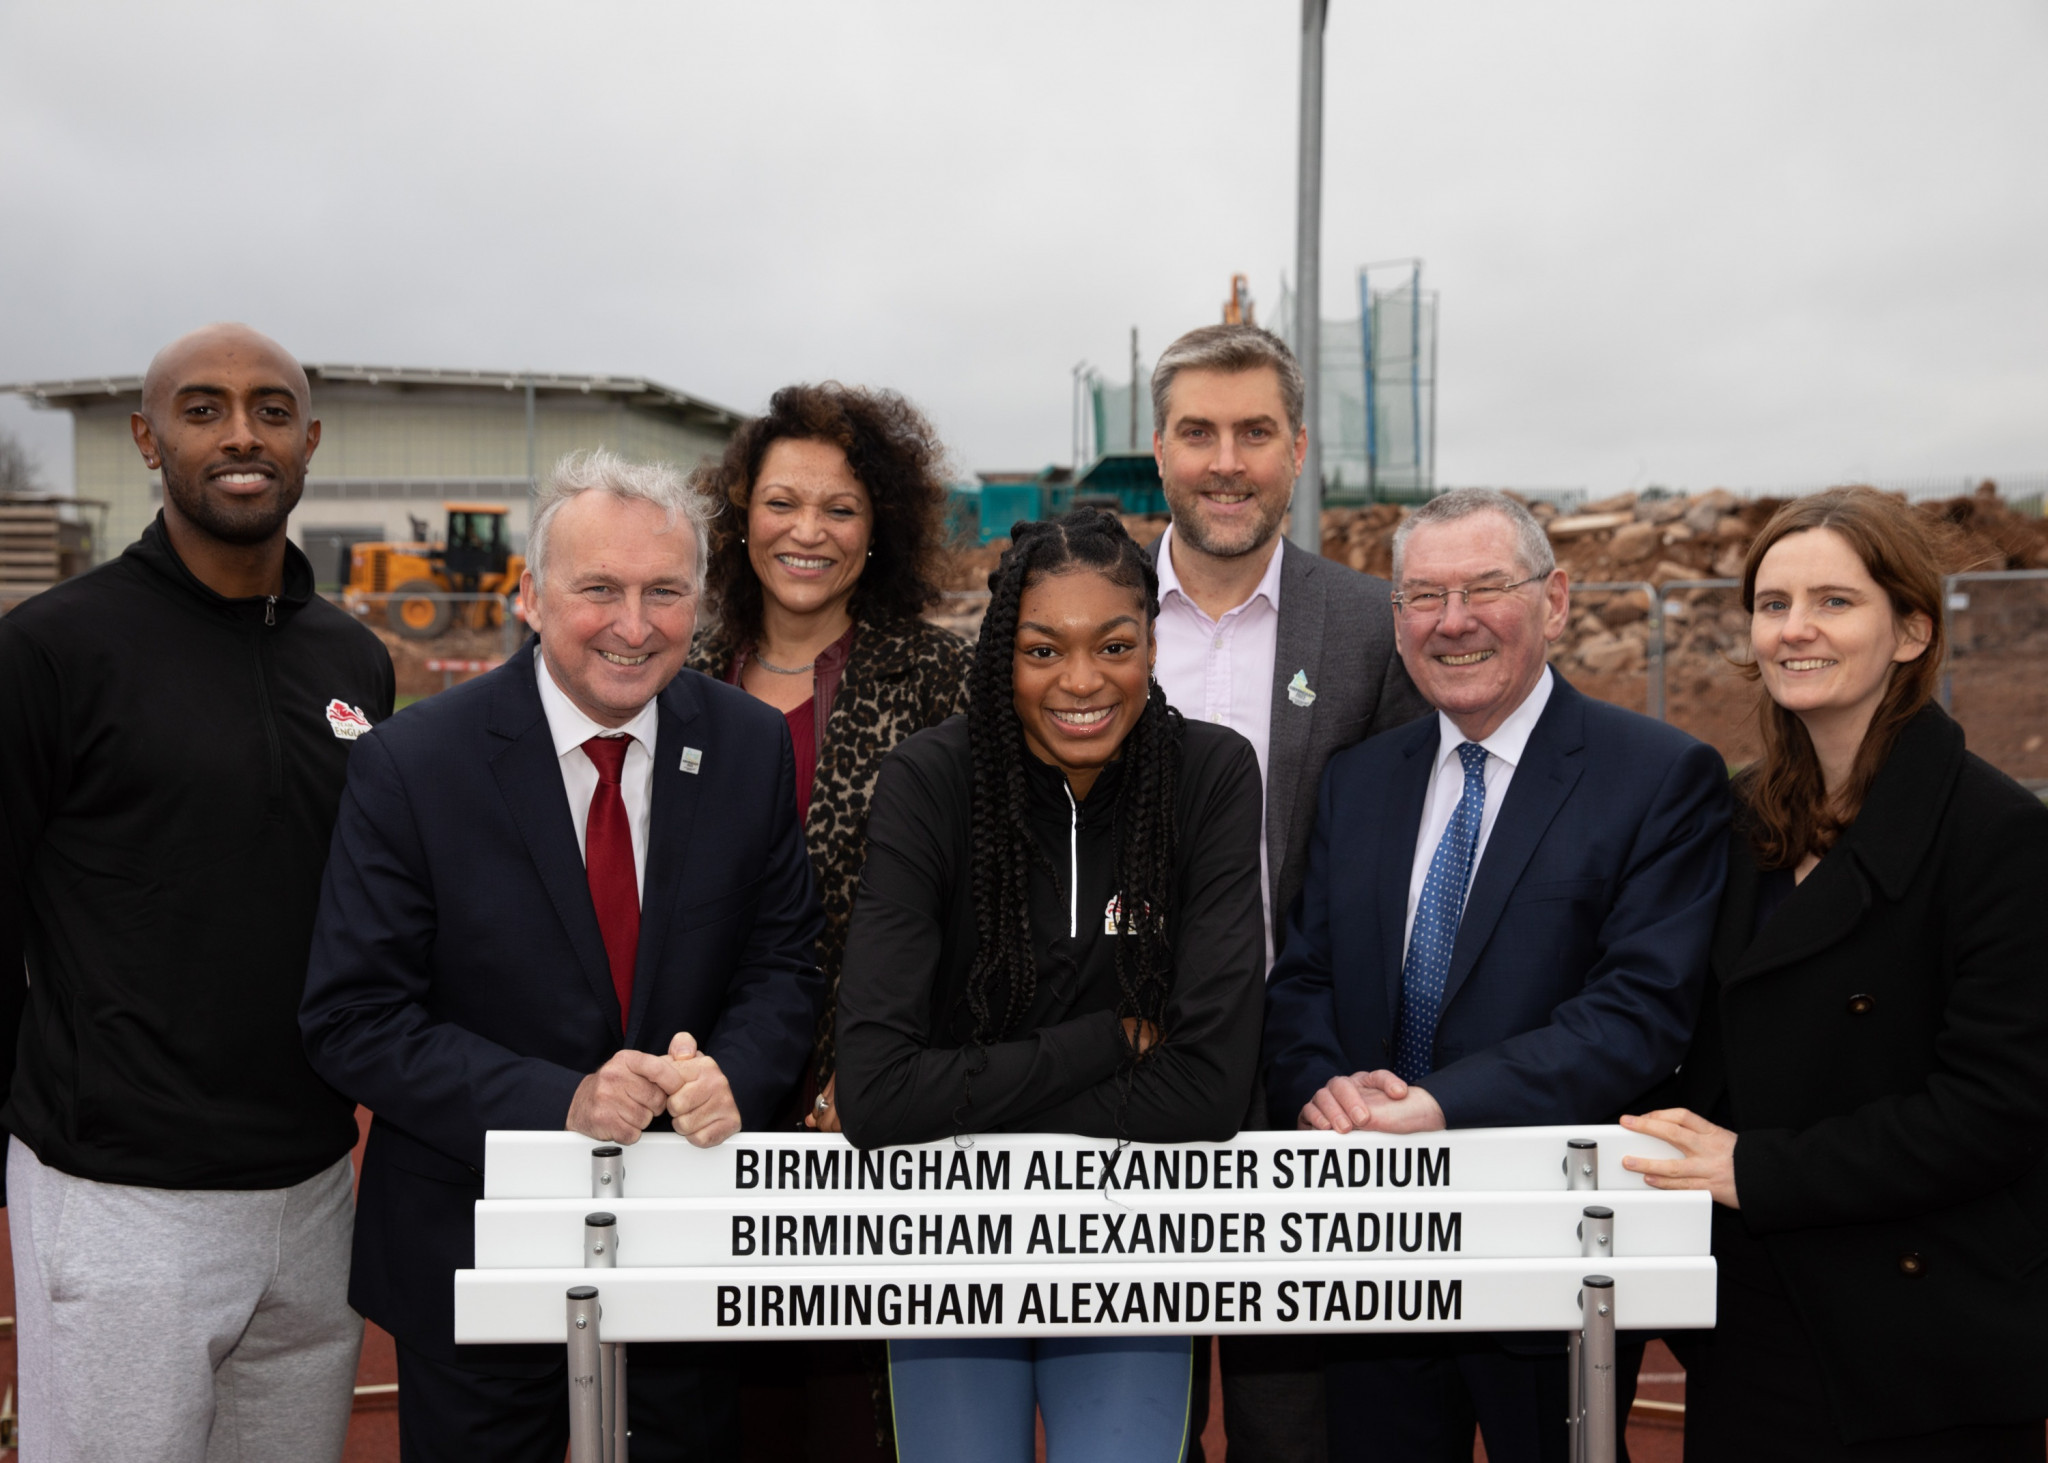 Major boost for Birmingham 2022 as Alexander Stadium revamp approved